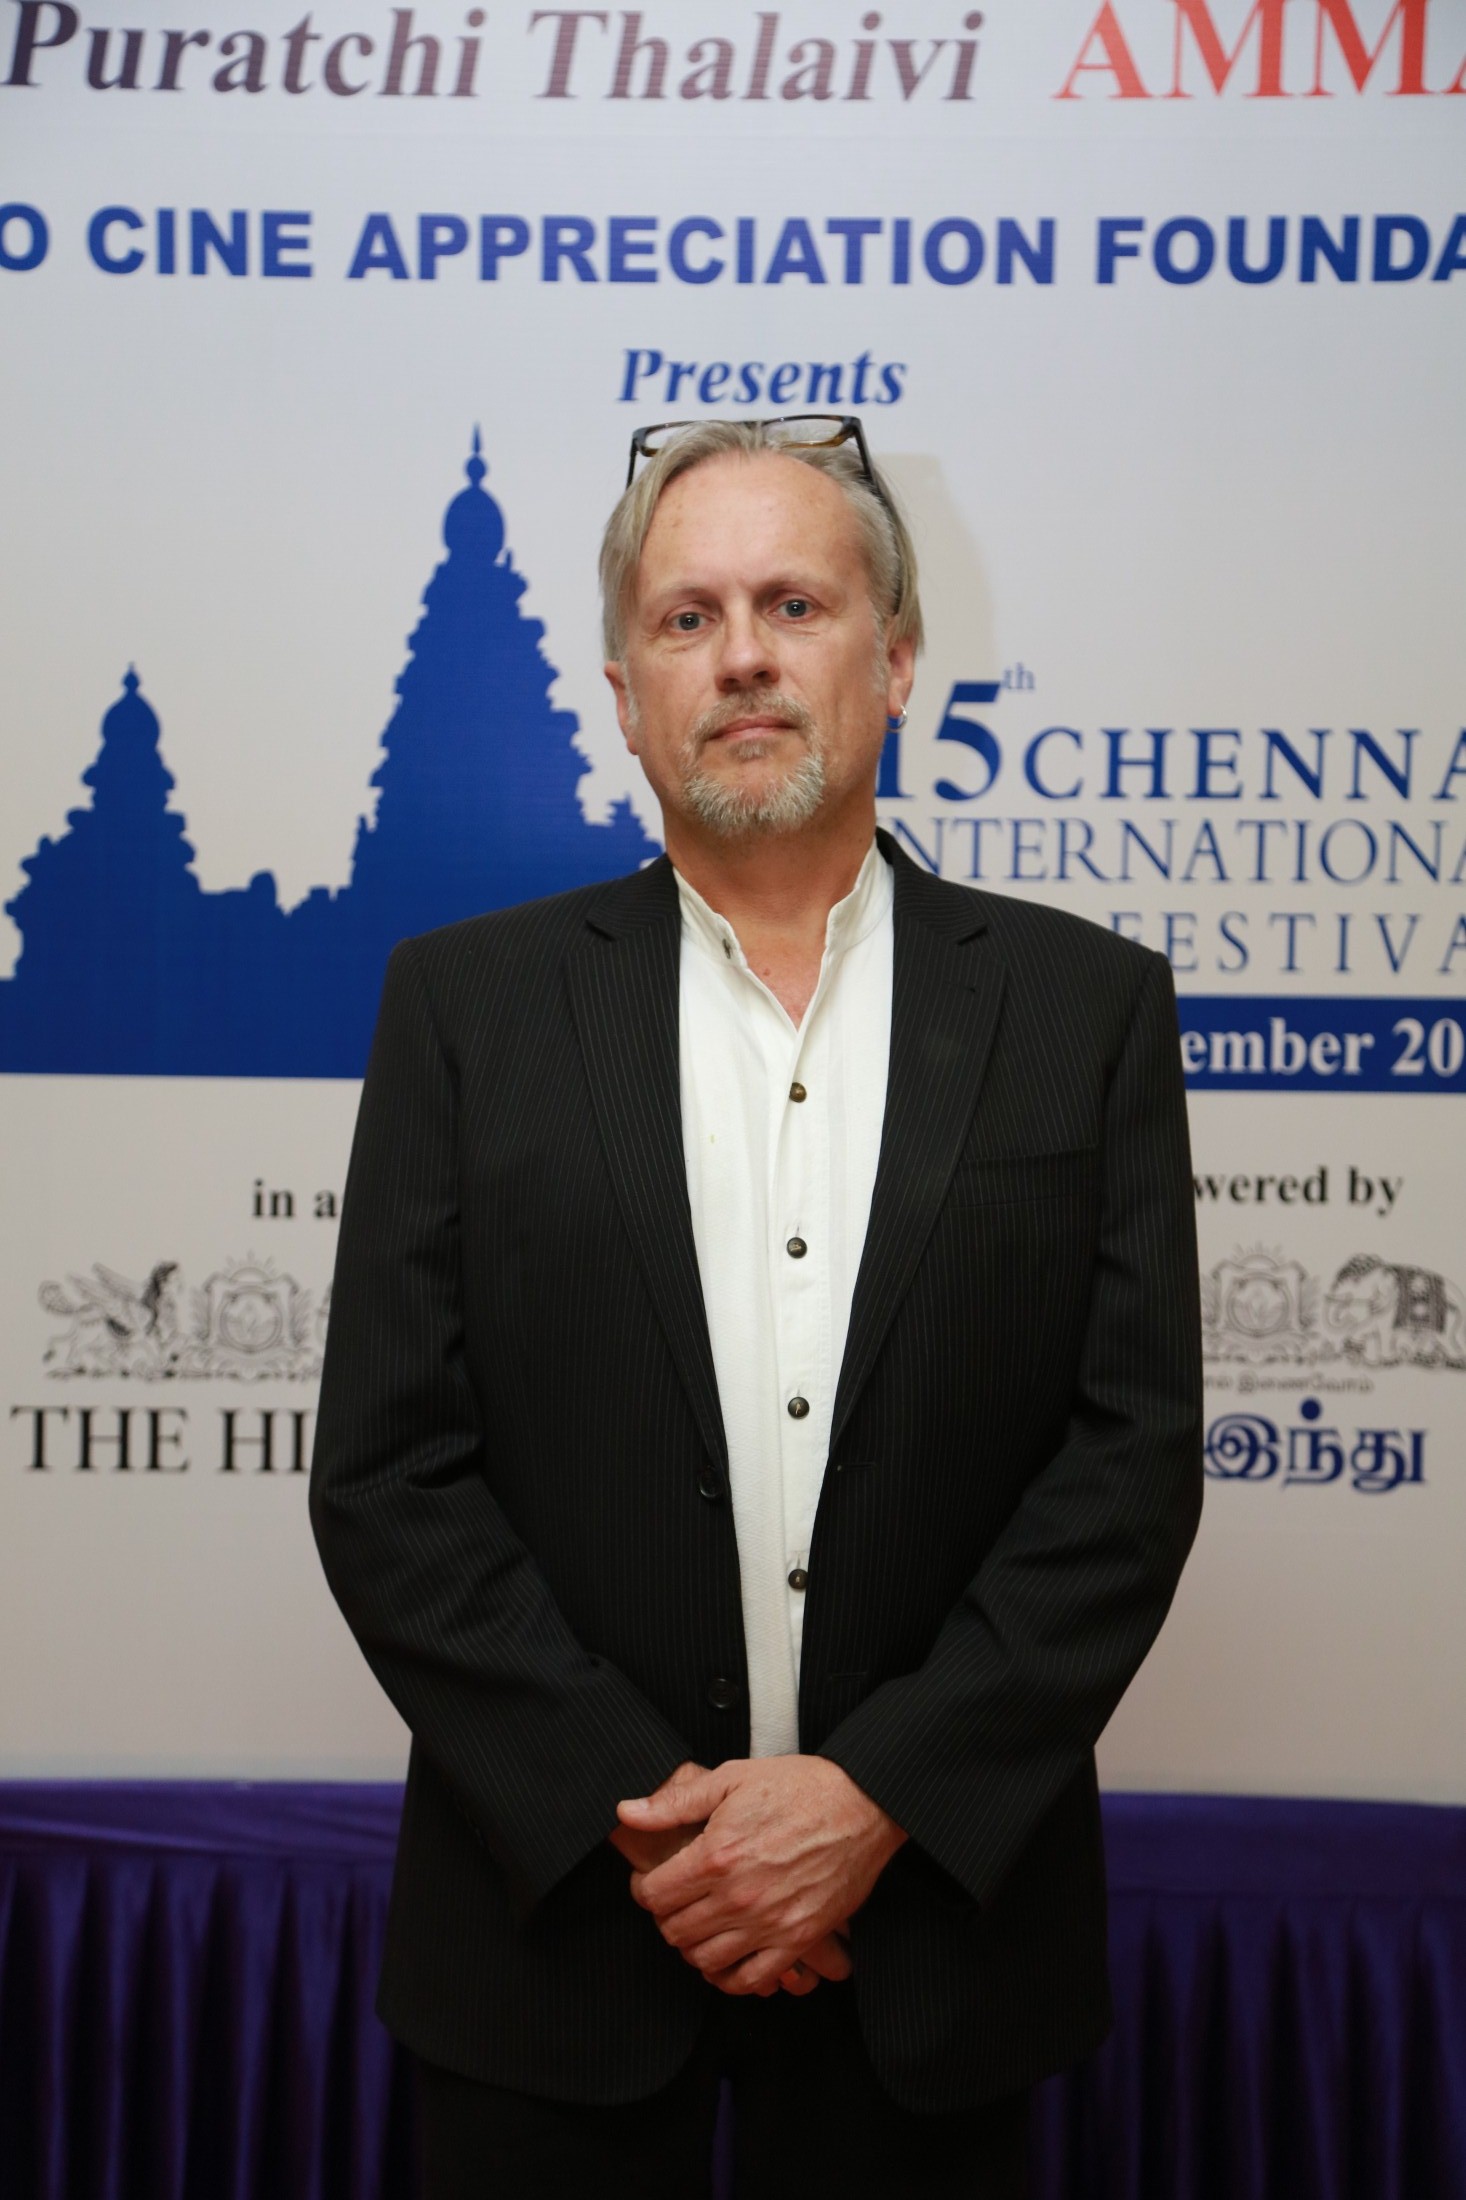 Ocean In Drop - Australian Movie Director Andrew Garton At 15th Chennai International Film Festival (4)